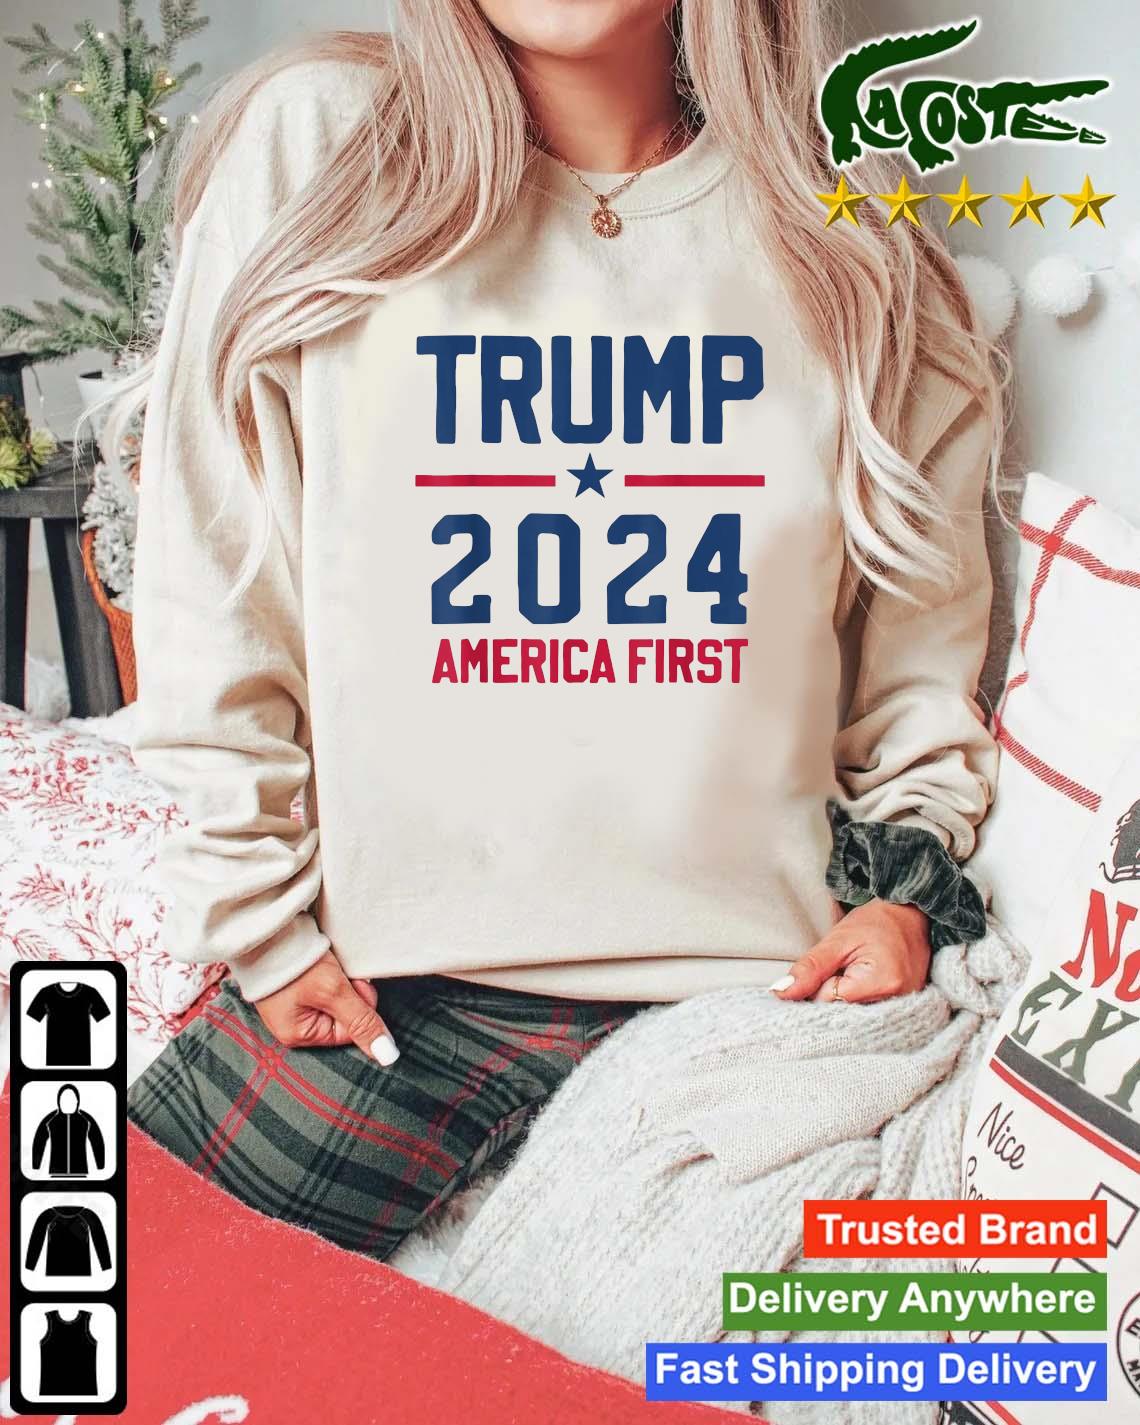 Trump 2024 America First Pro Trump Sweats Mockup Sweater